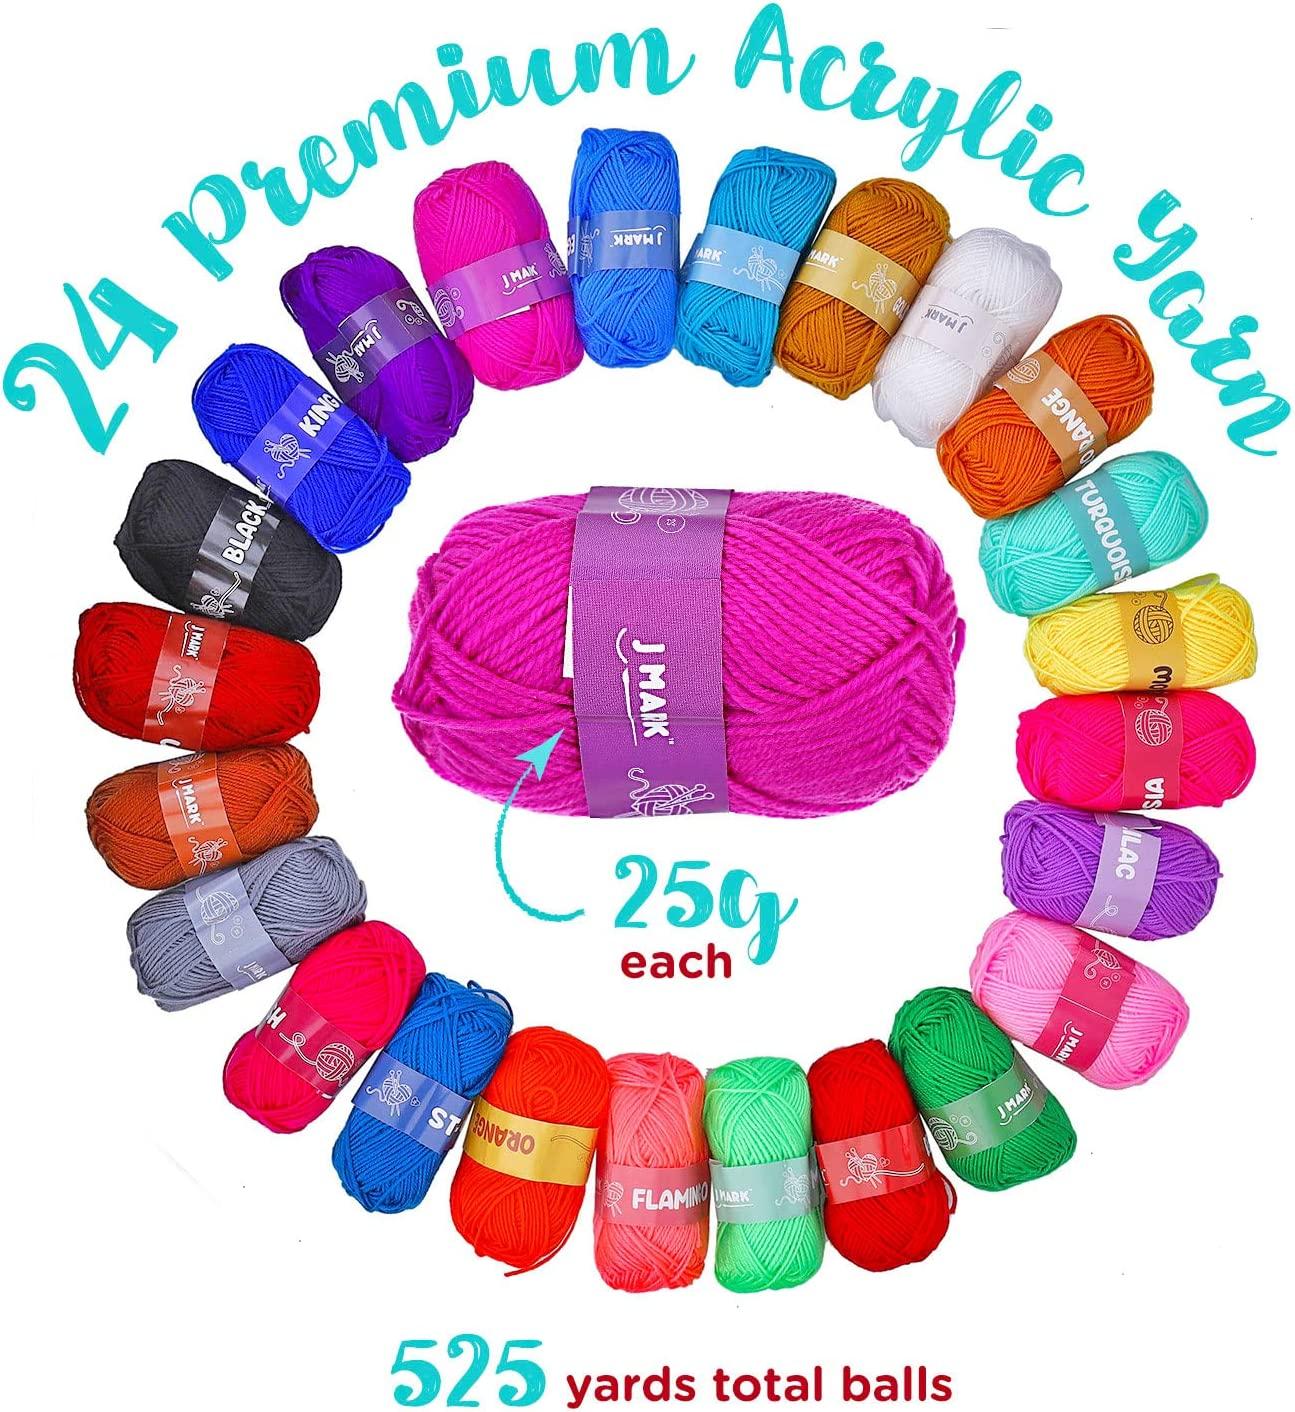 Crochet Kit With Hooks Yarn Balls Set Premium Bundle Includes 12 Colors  Crafts